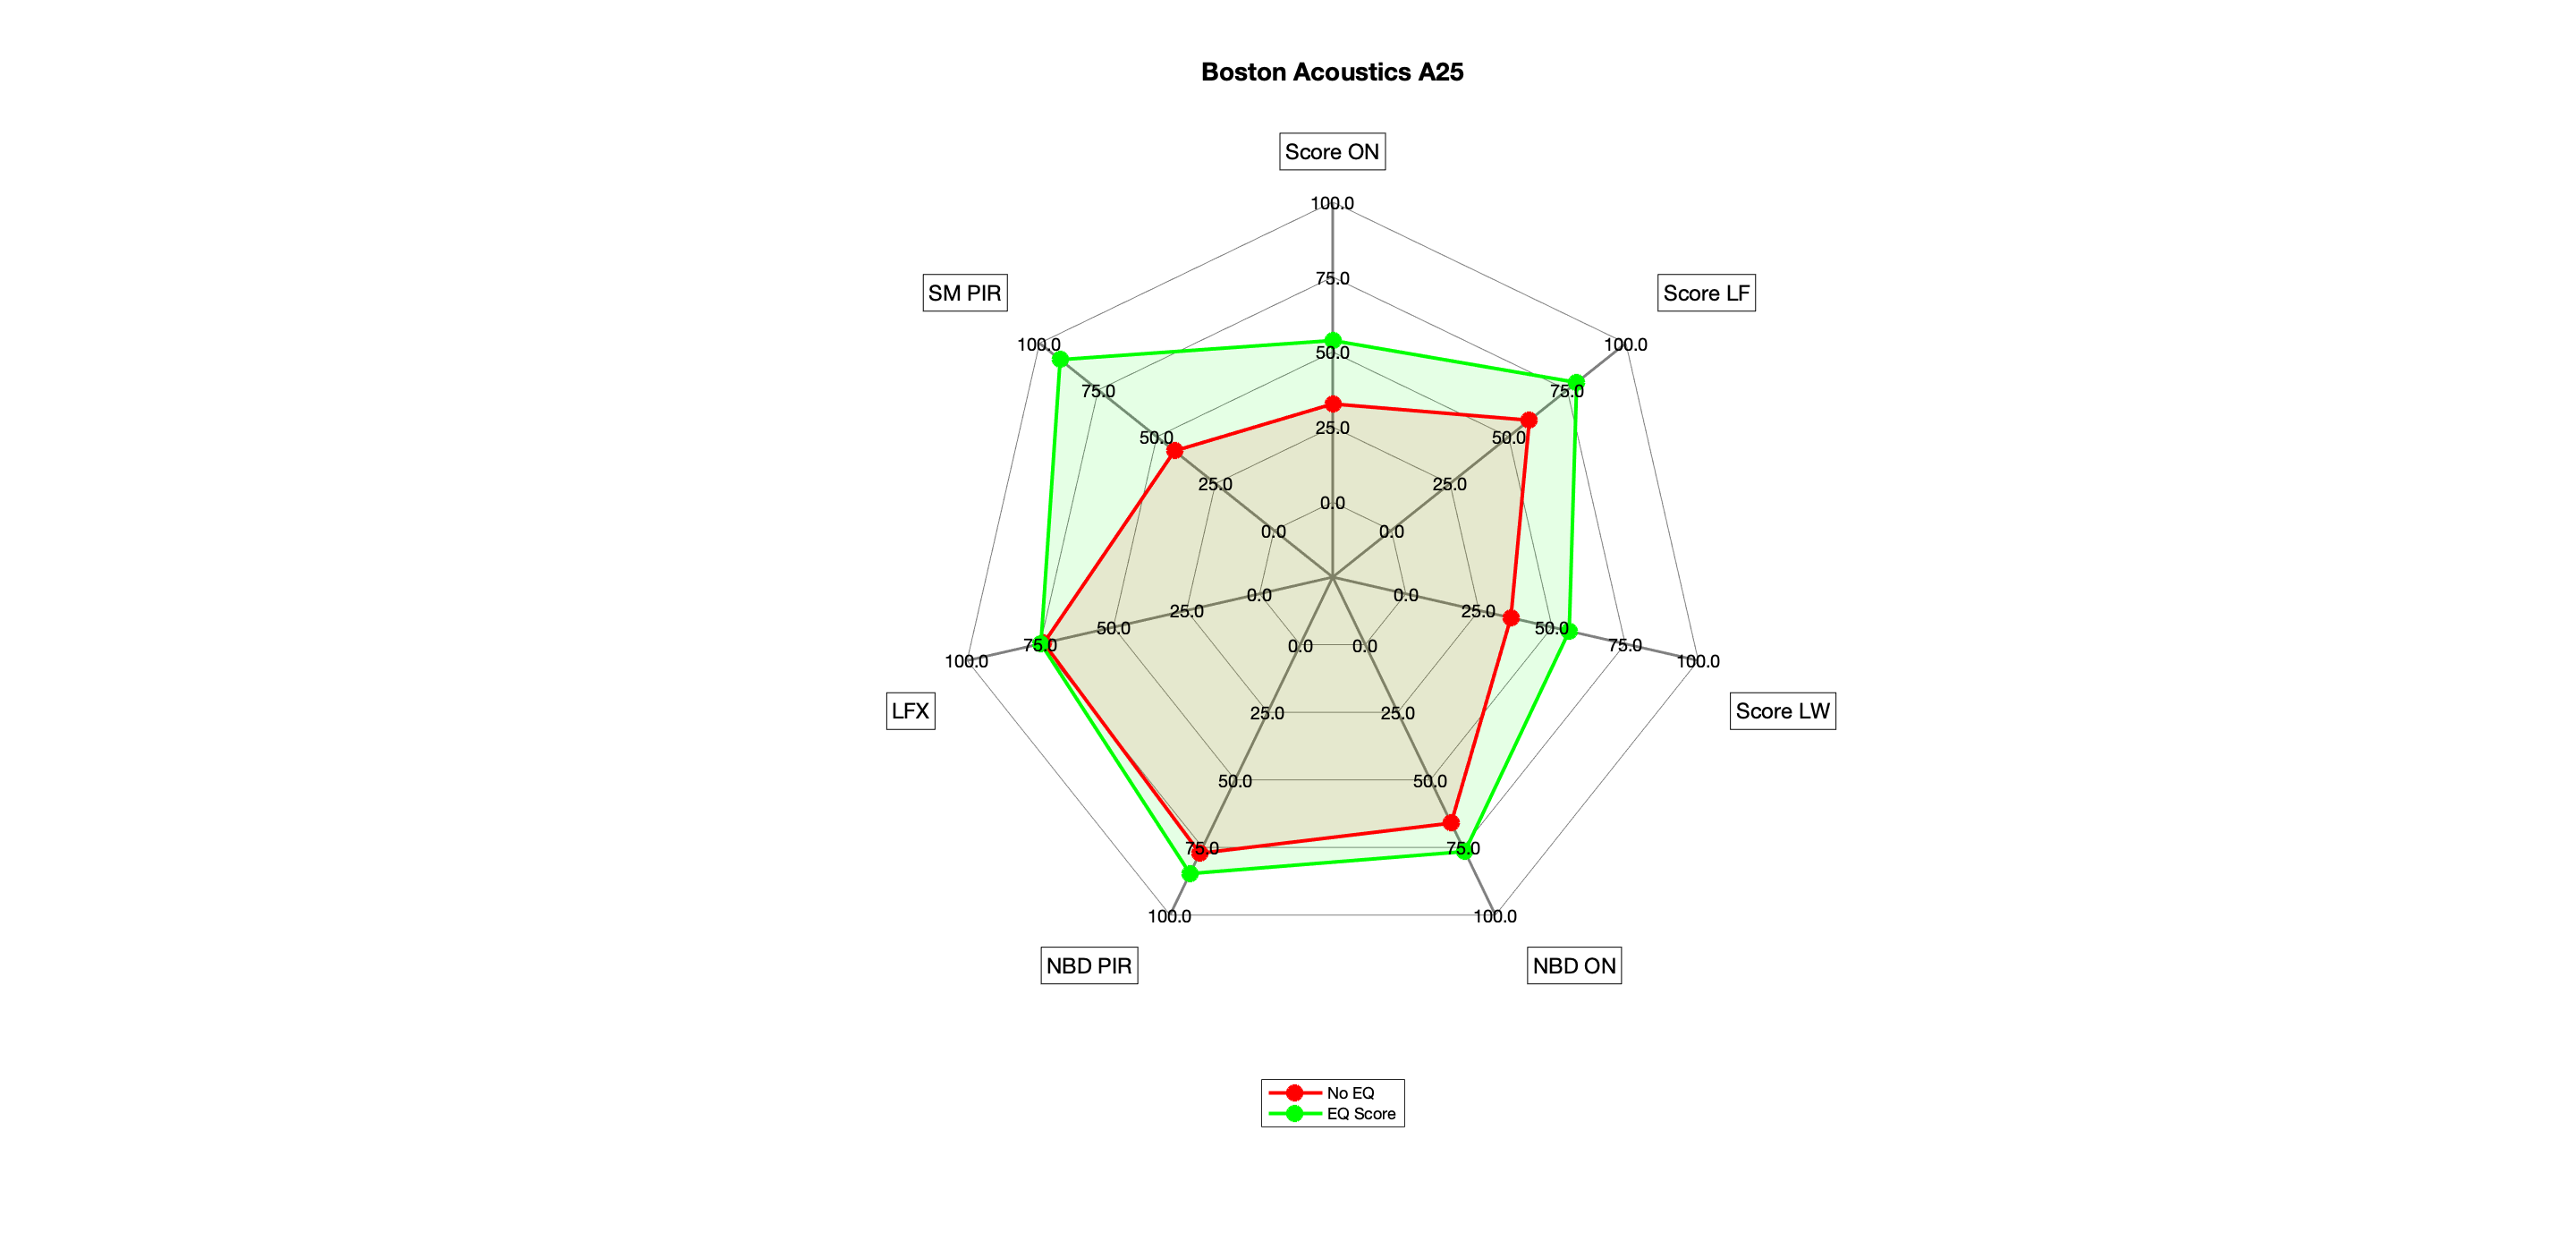 Boston Acoustics A25 EQ Score Radar.png